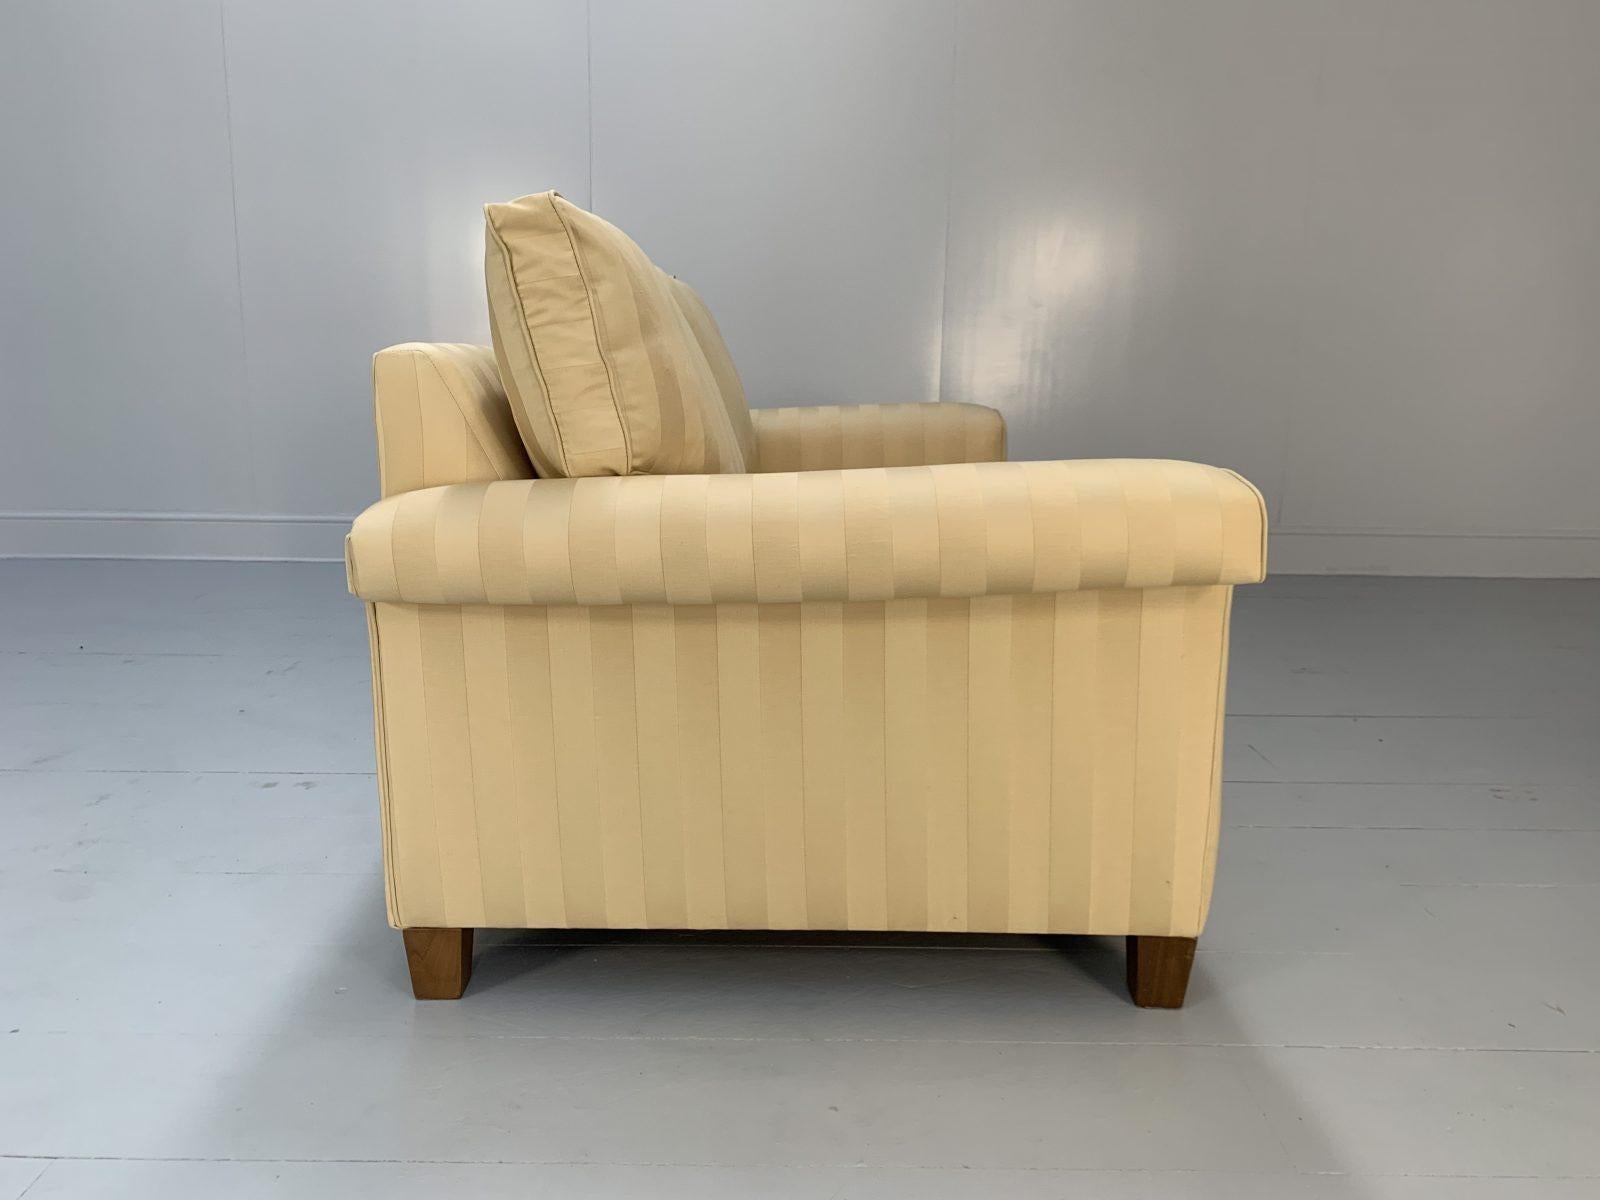 Duresta “Gabrielle” 2.5-Seat Sofa – In Gold Stripe Fabric In Good Condition For Sale In Barrowford, GB